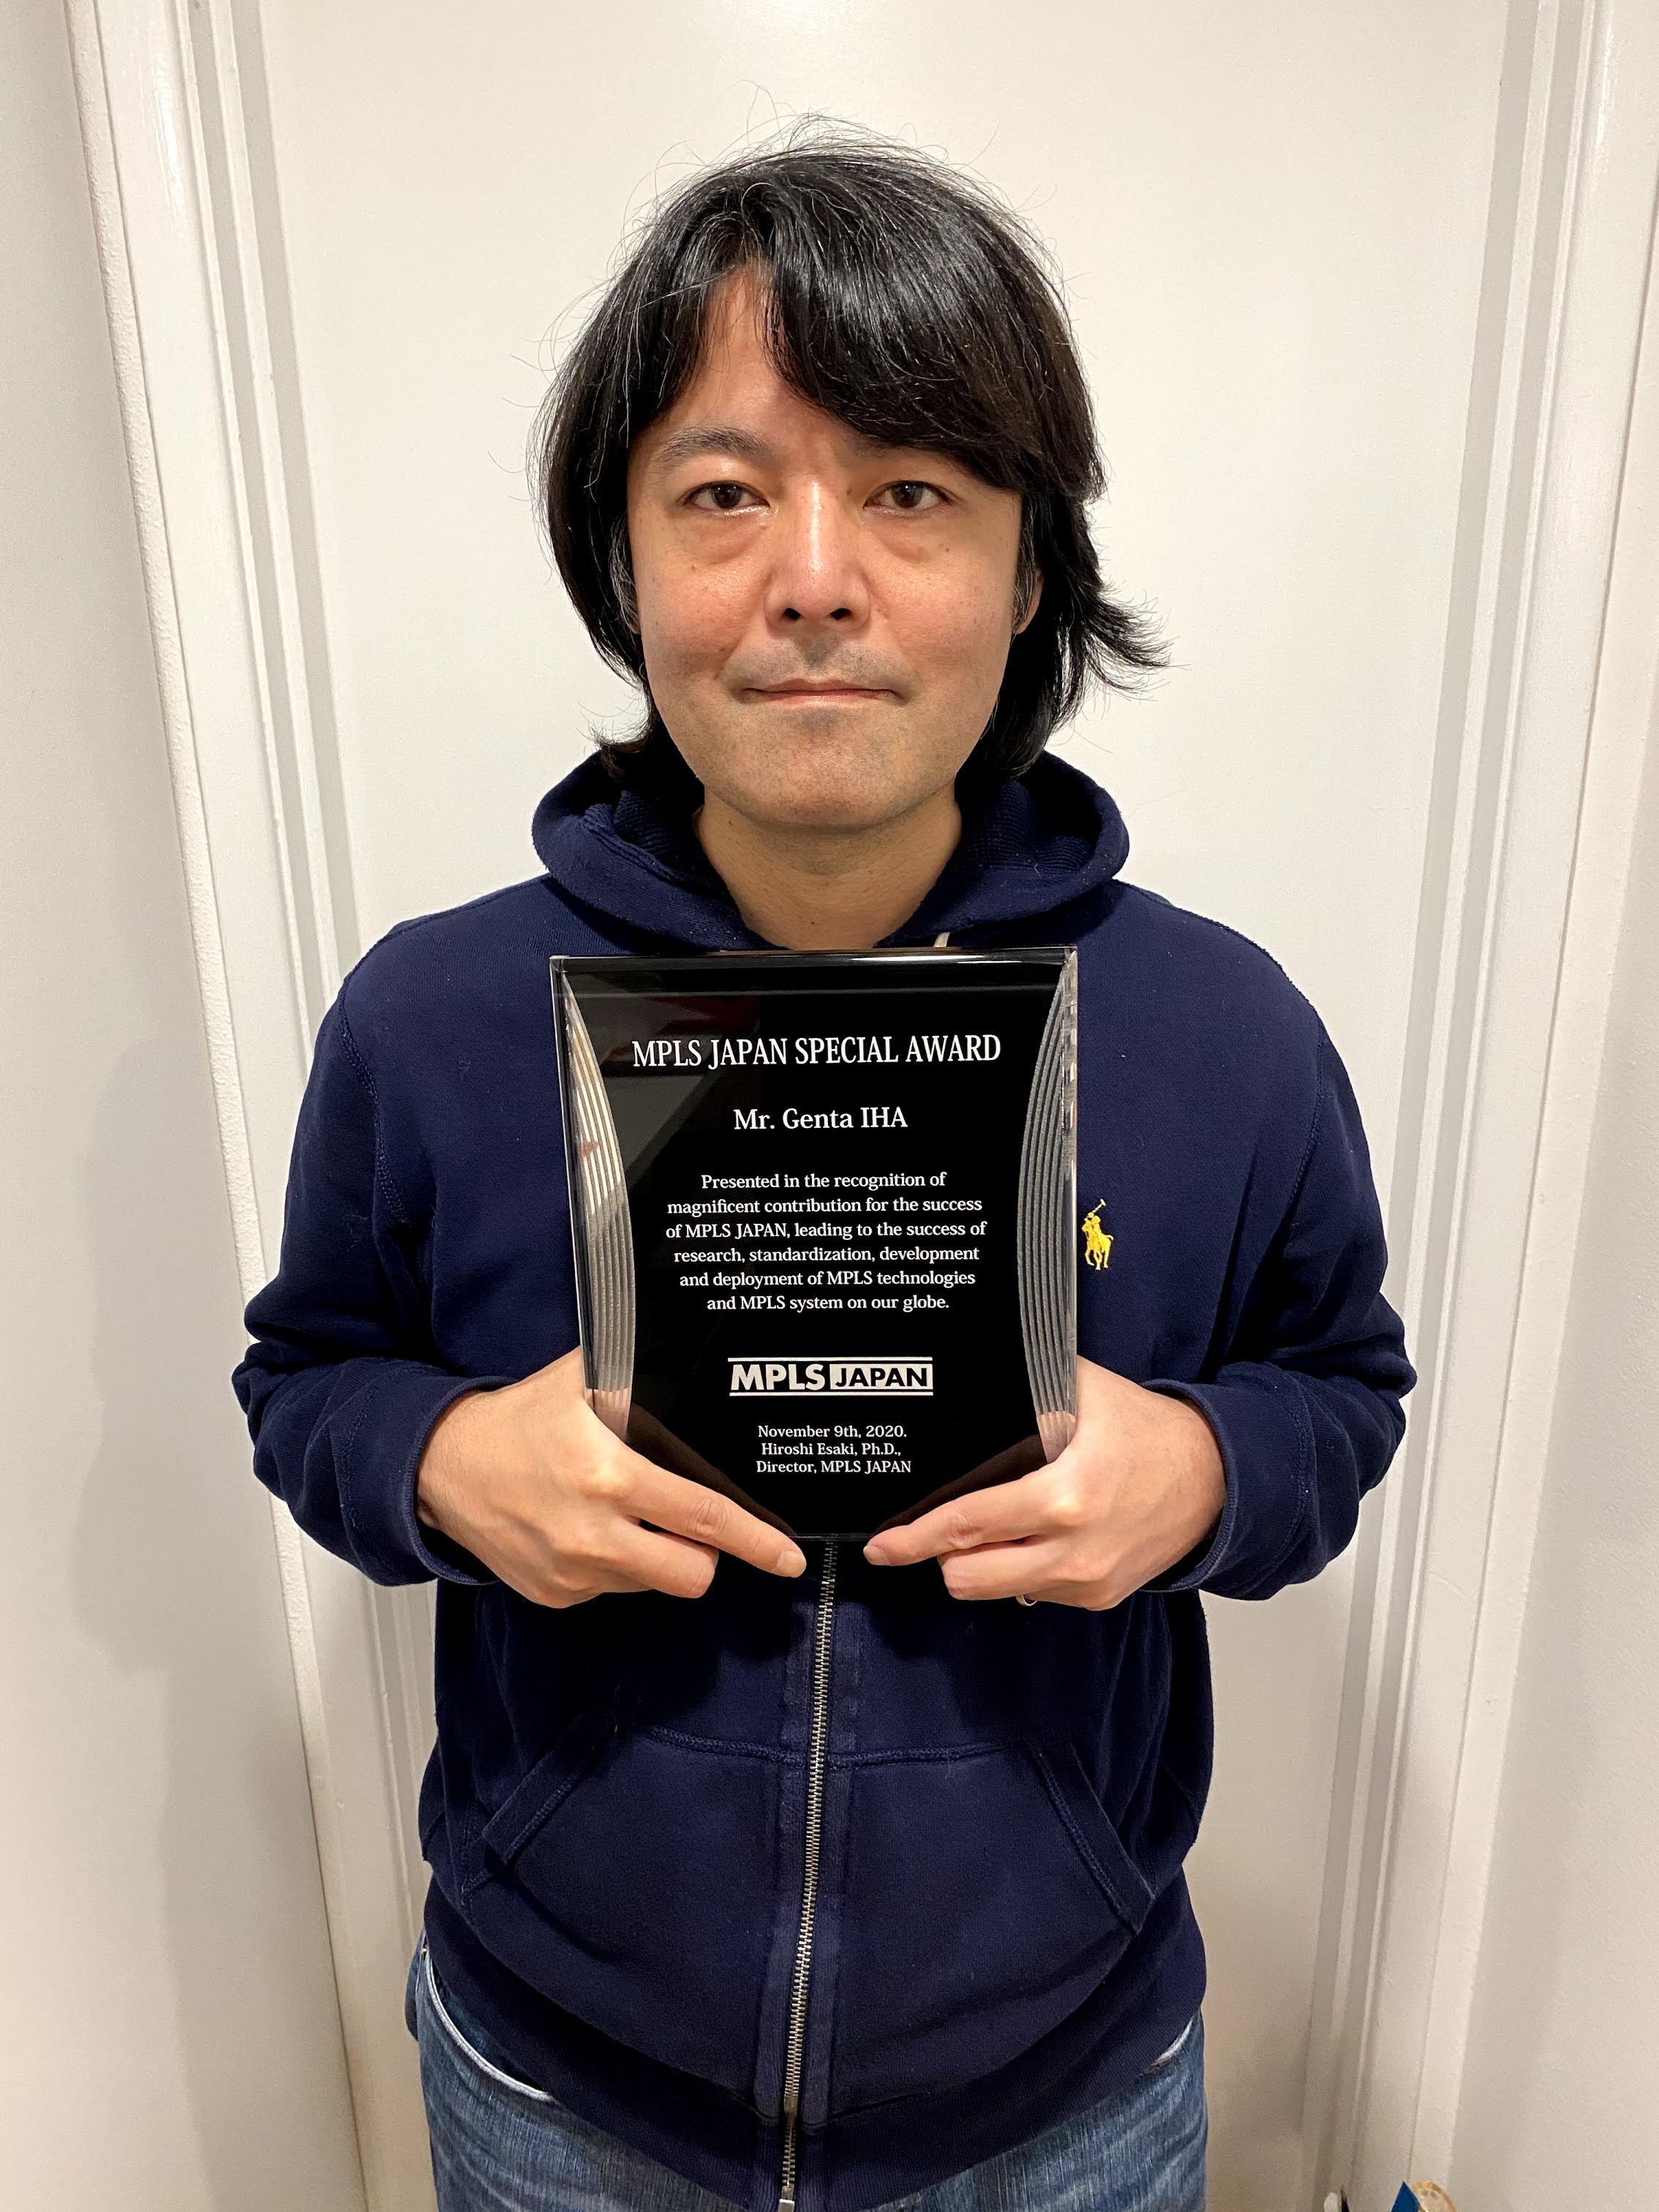 MPLS JAPAN Award 2020 winners